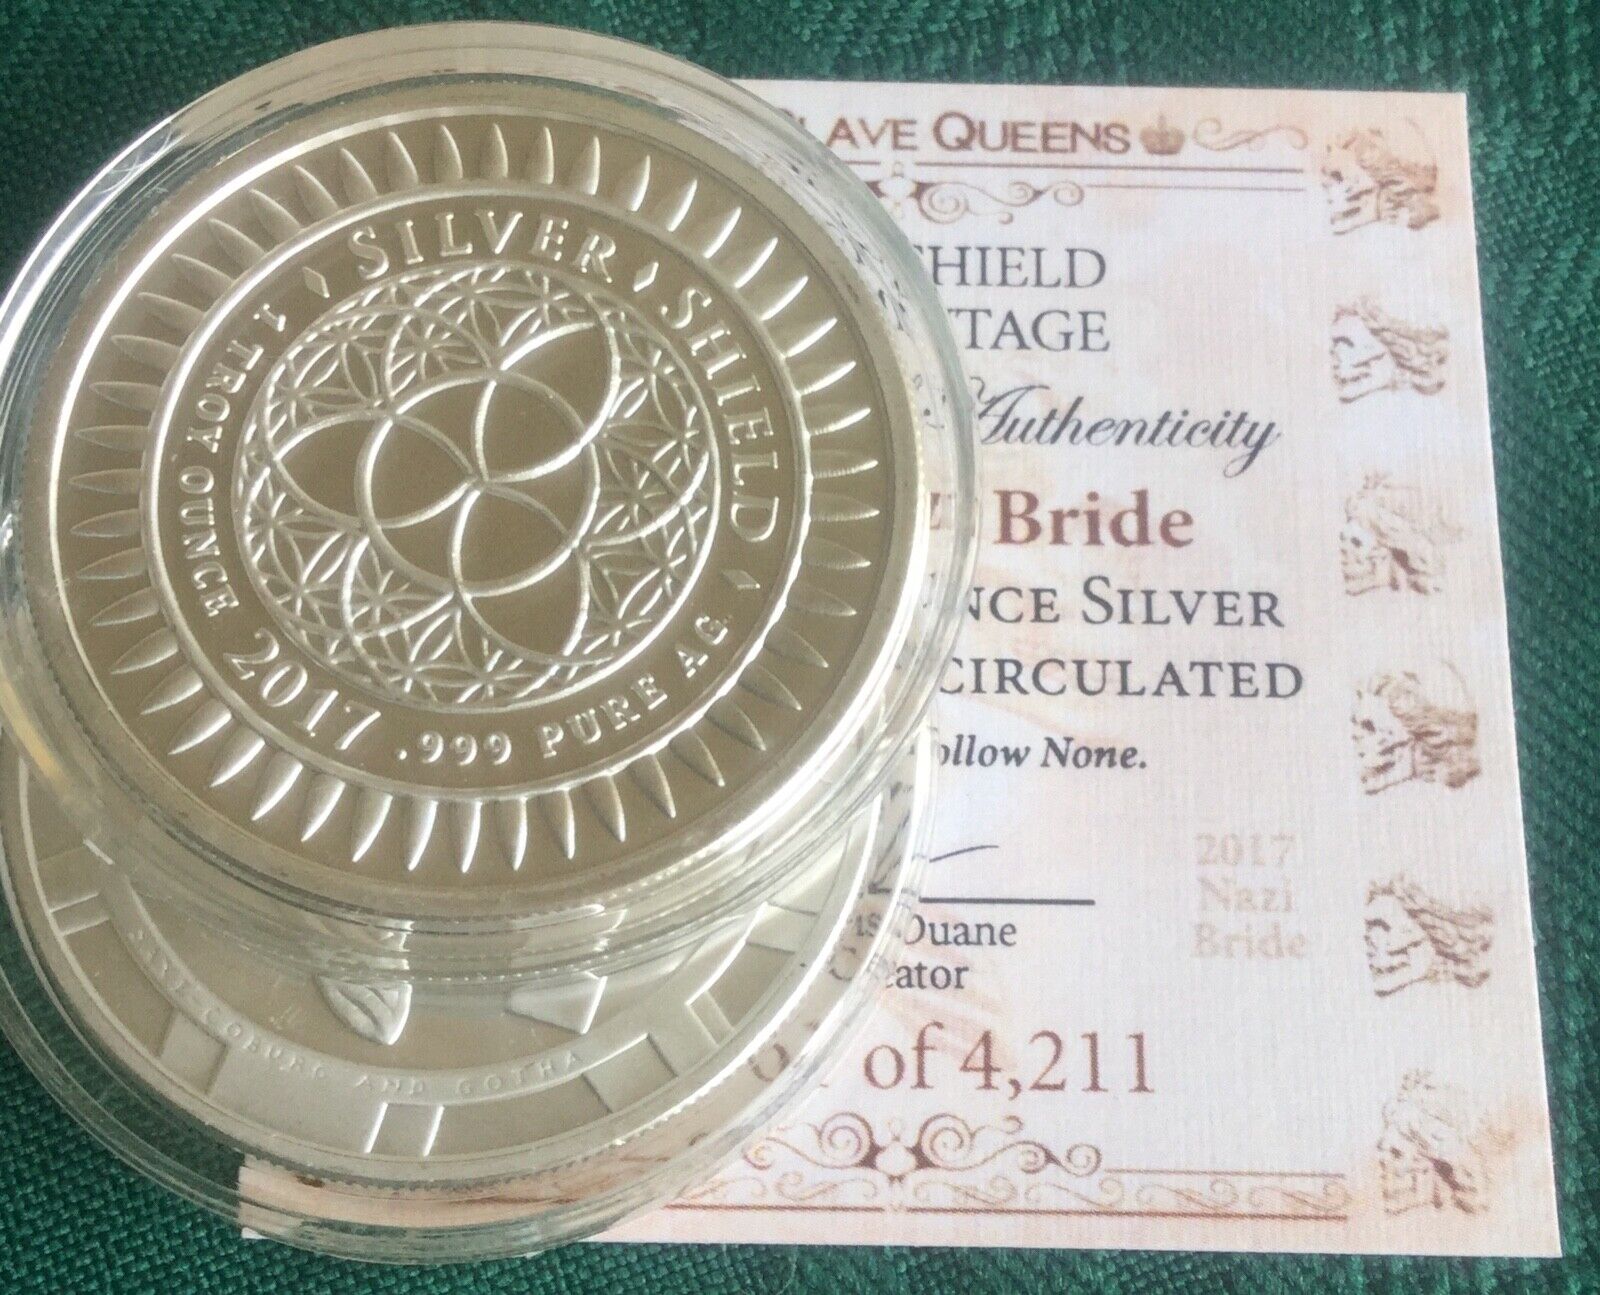 Slave Queen BU #2 – 1 oz 2017 "Slave" Bride 999 Silver Shield Airtite COA 999